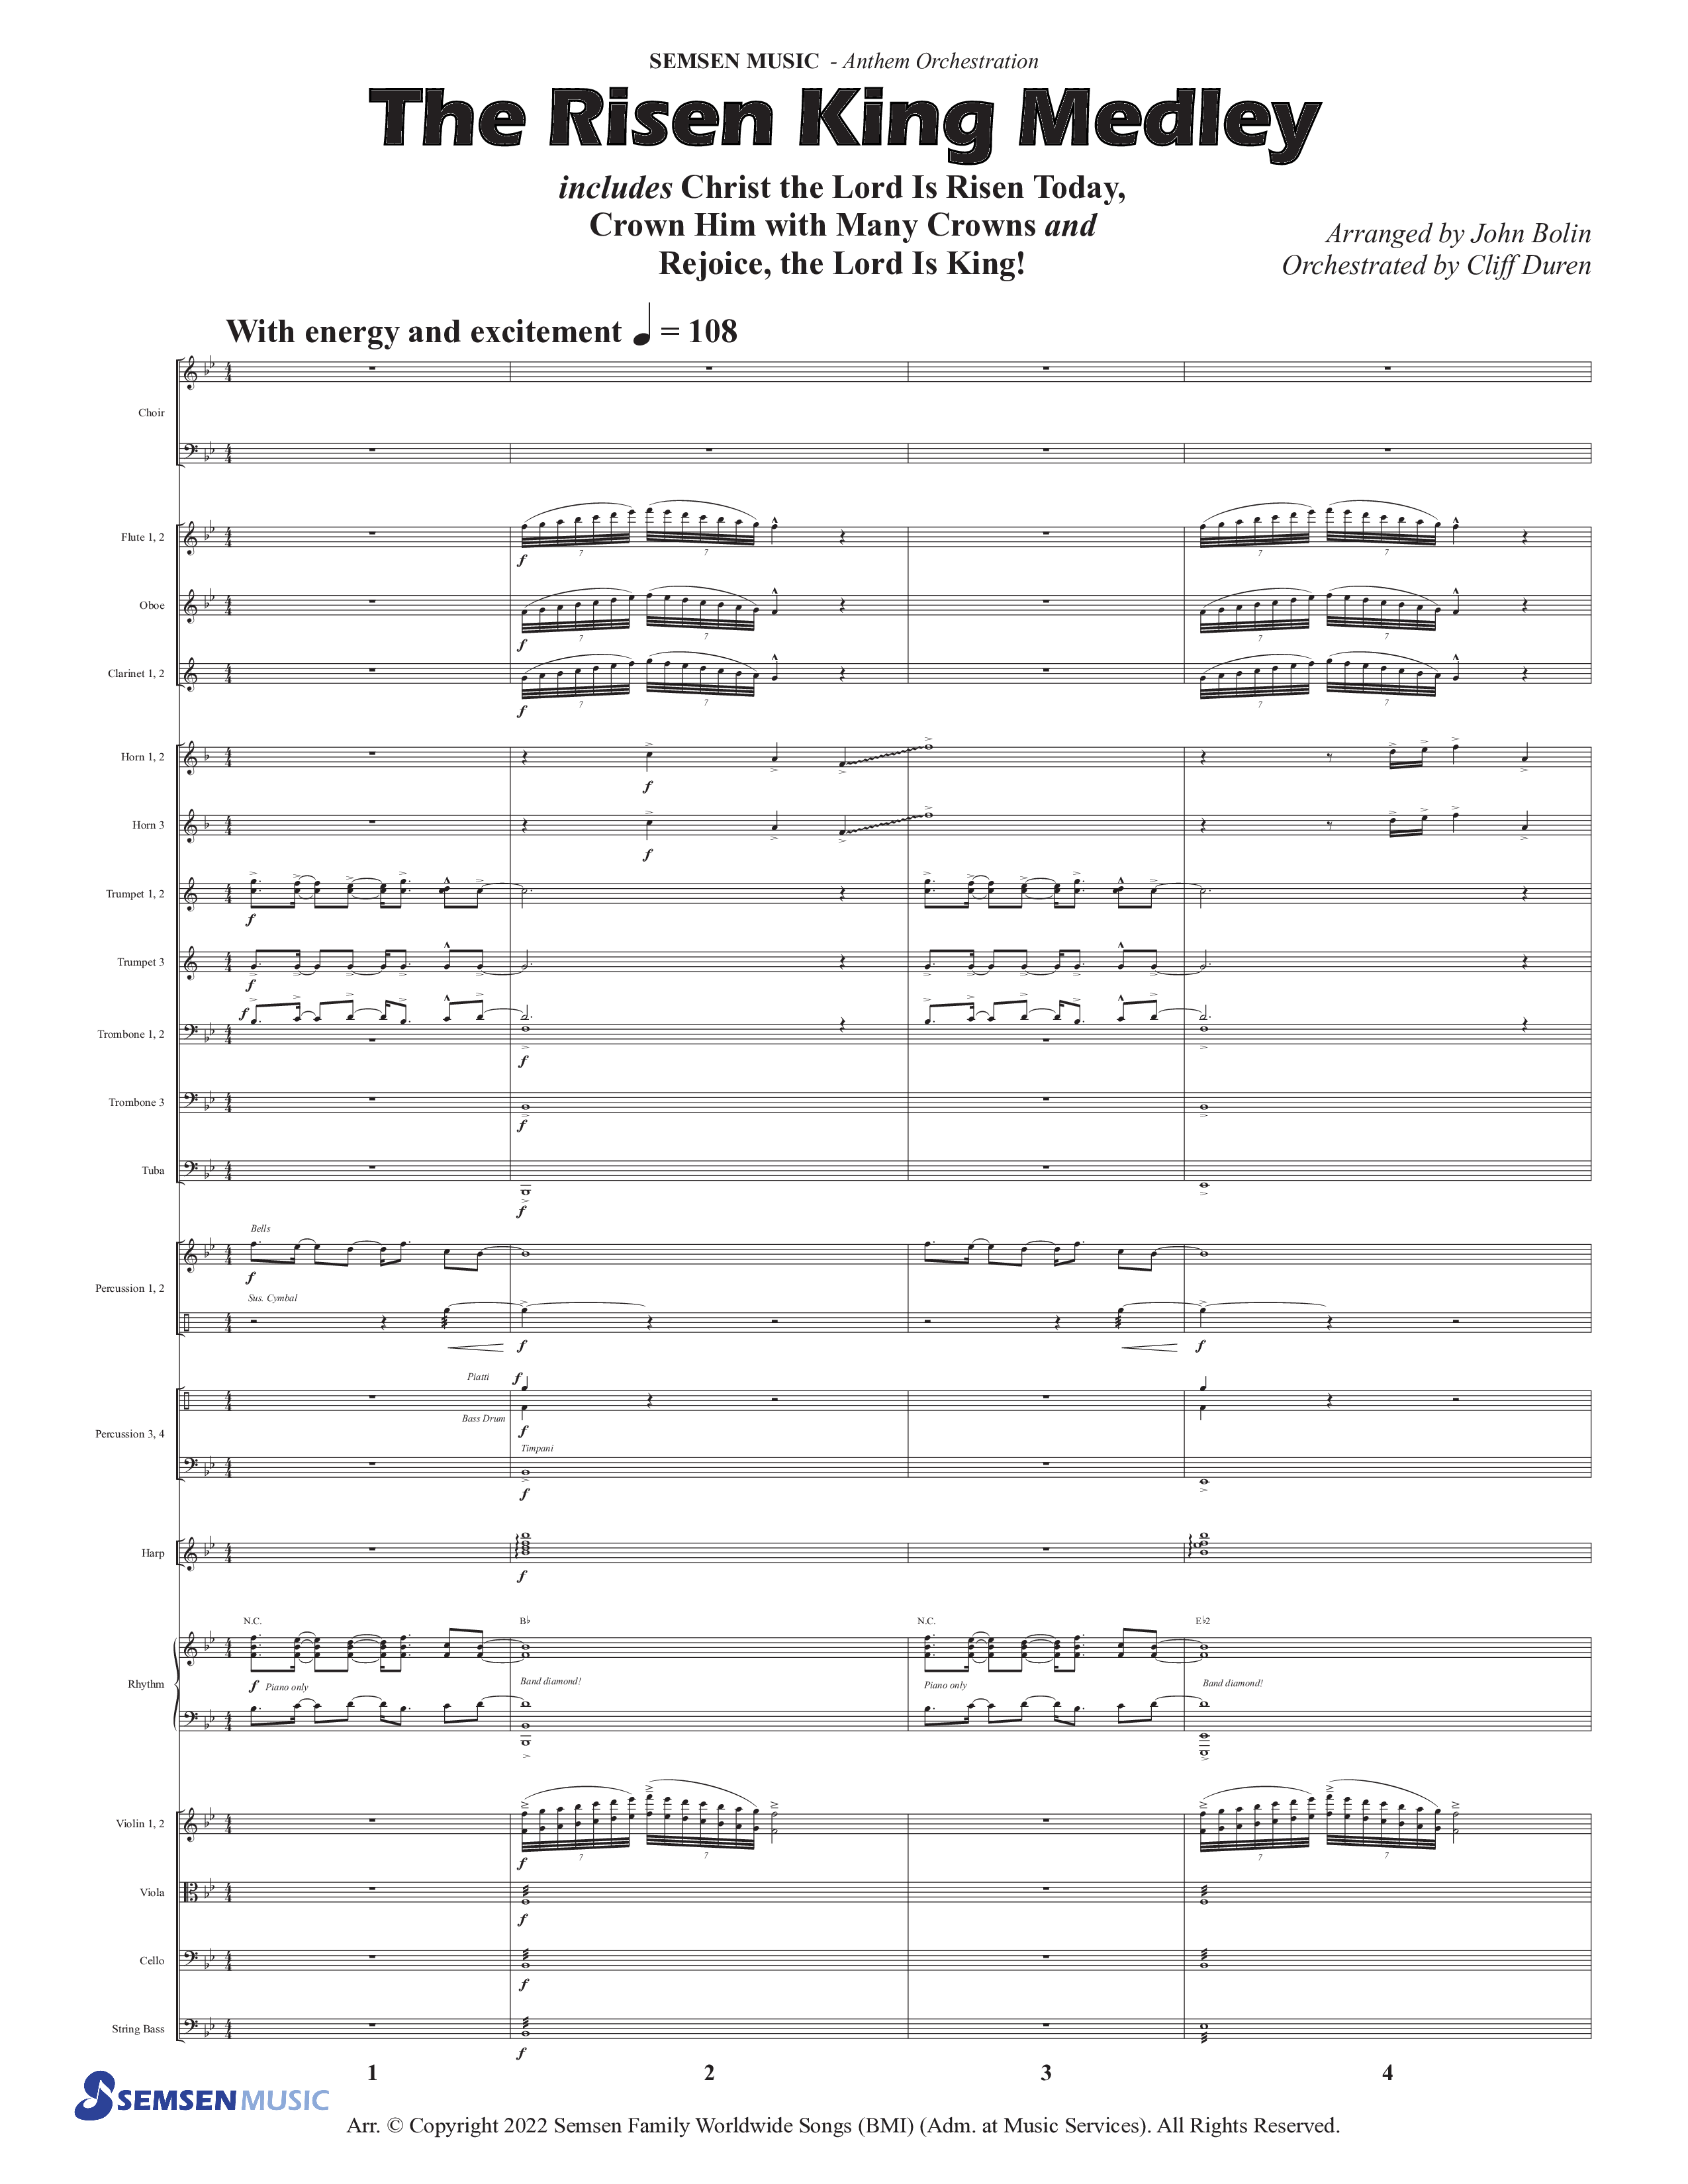 The Risen King Medley (Choral Anthem SATB) Conductor's Score (Semsen Music / Arr. John Bolin / Orch. Cliff Duren)